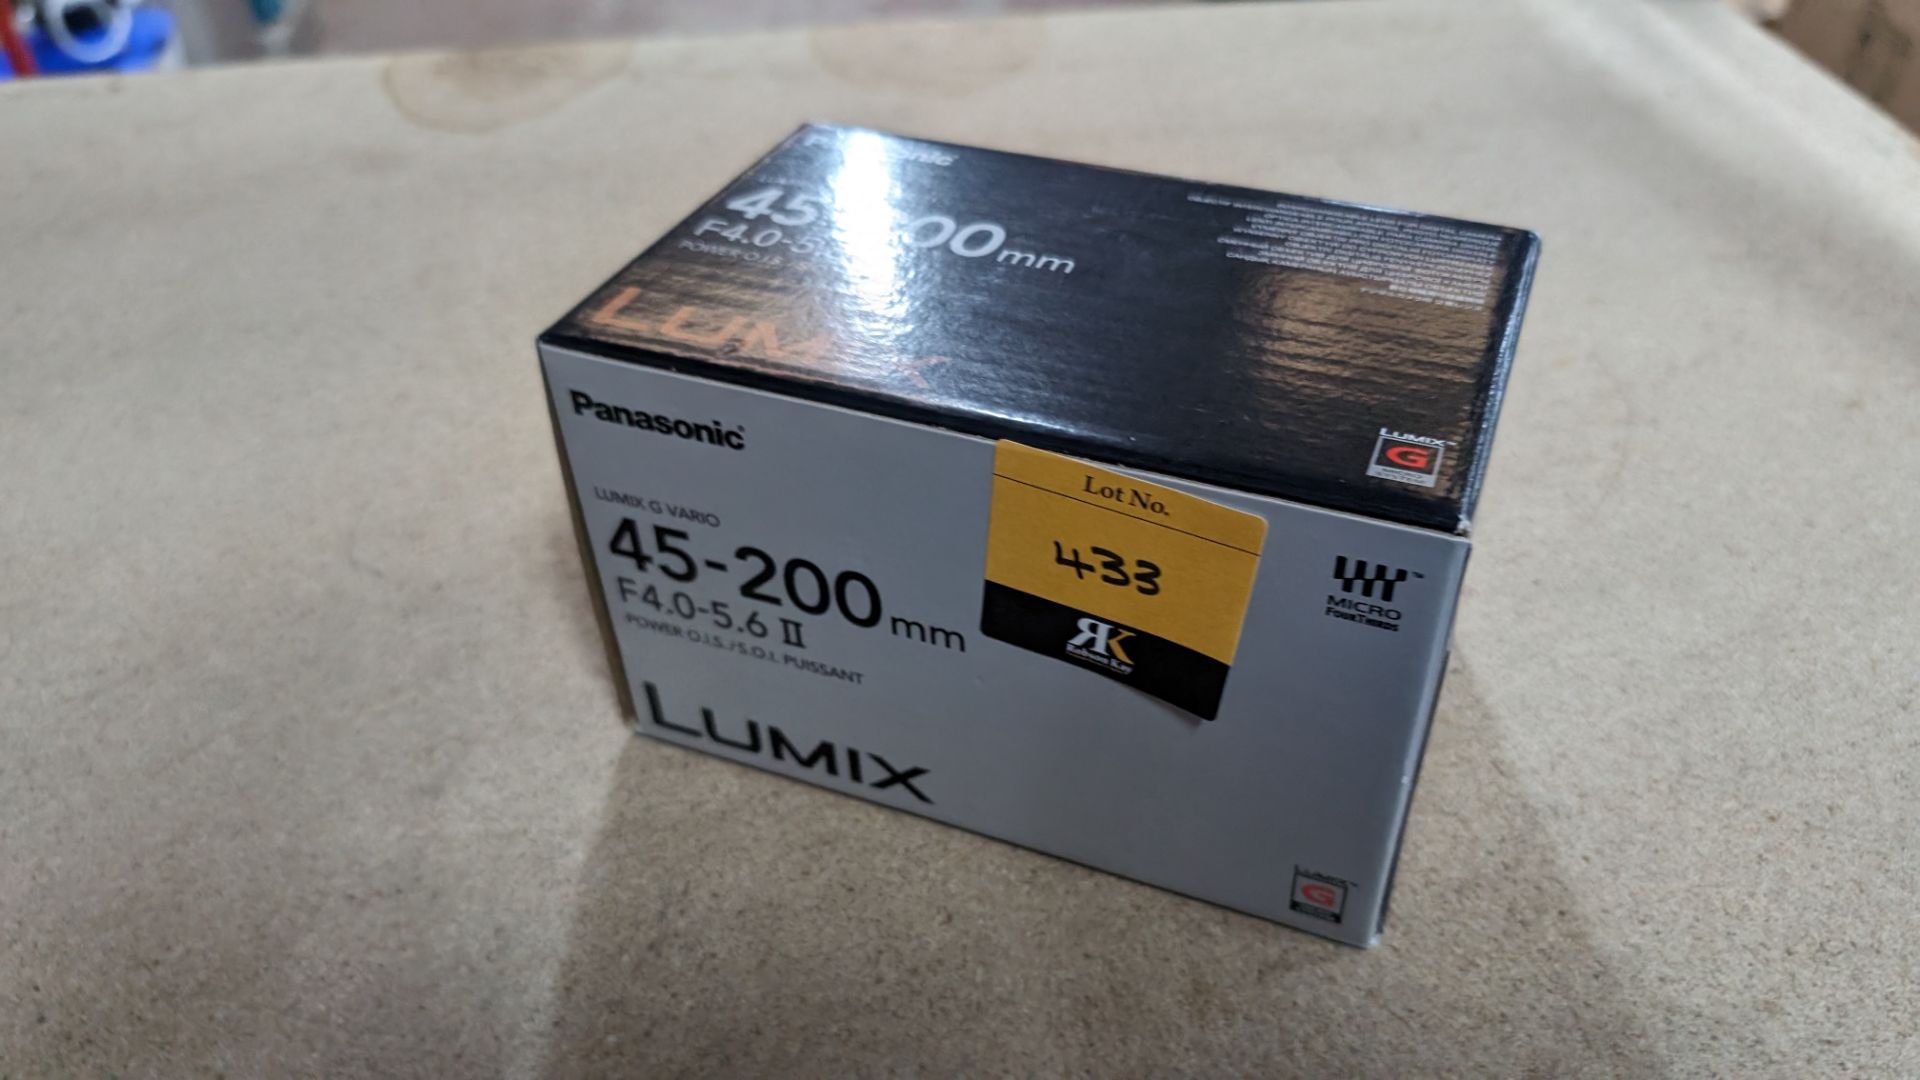 Panasonic Lumix G Vario 45-200mm lens, model H-FSA45200, f4.0-5.6 II - Image 2 of 6